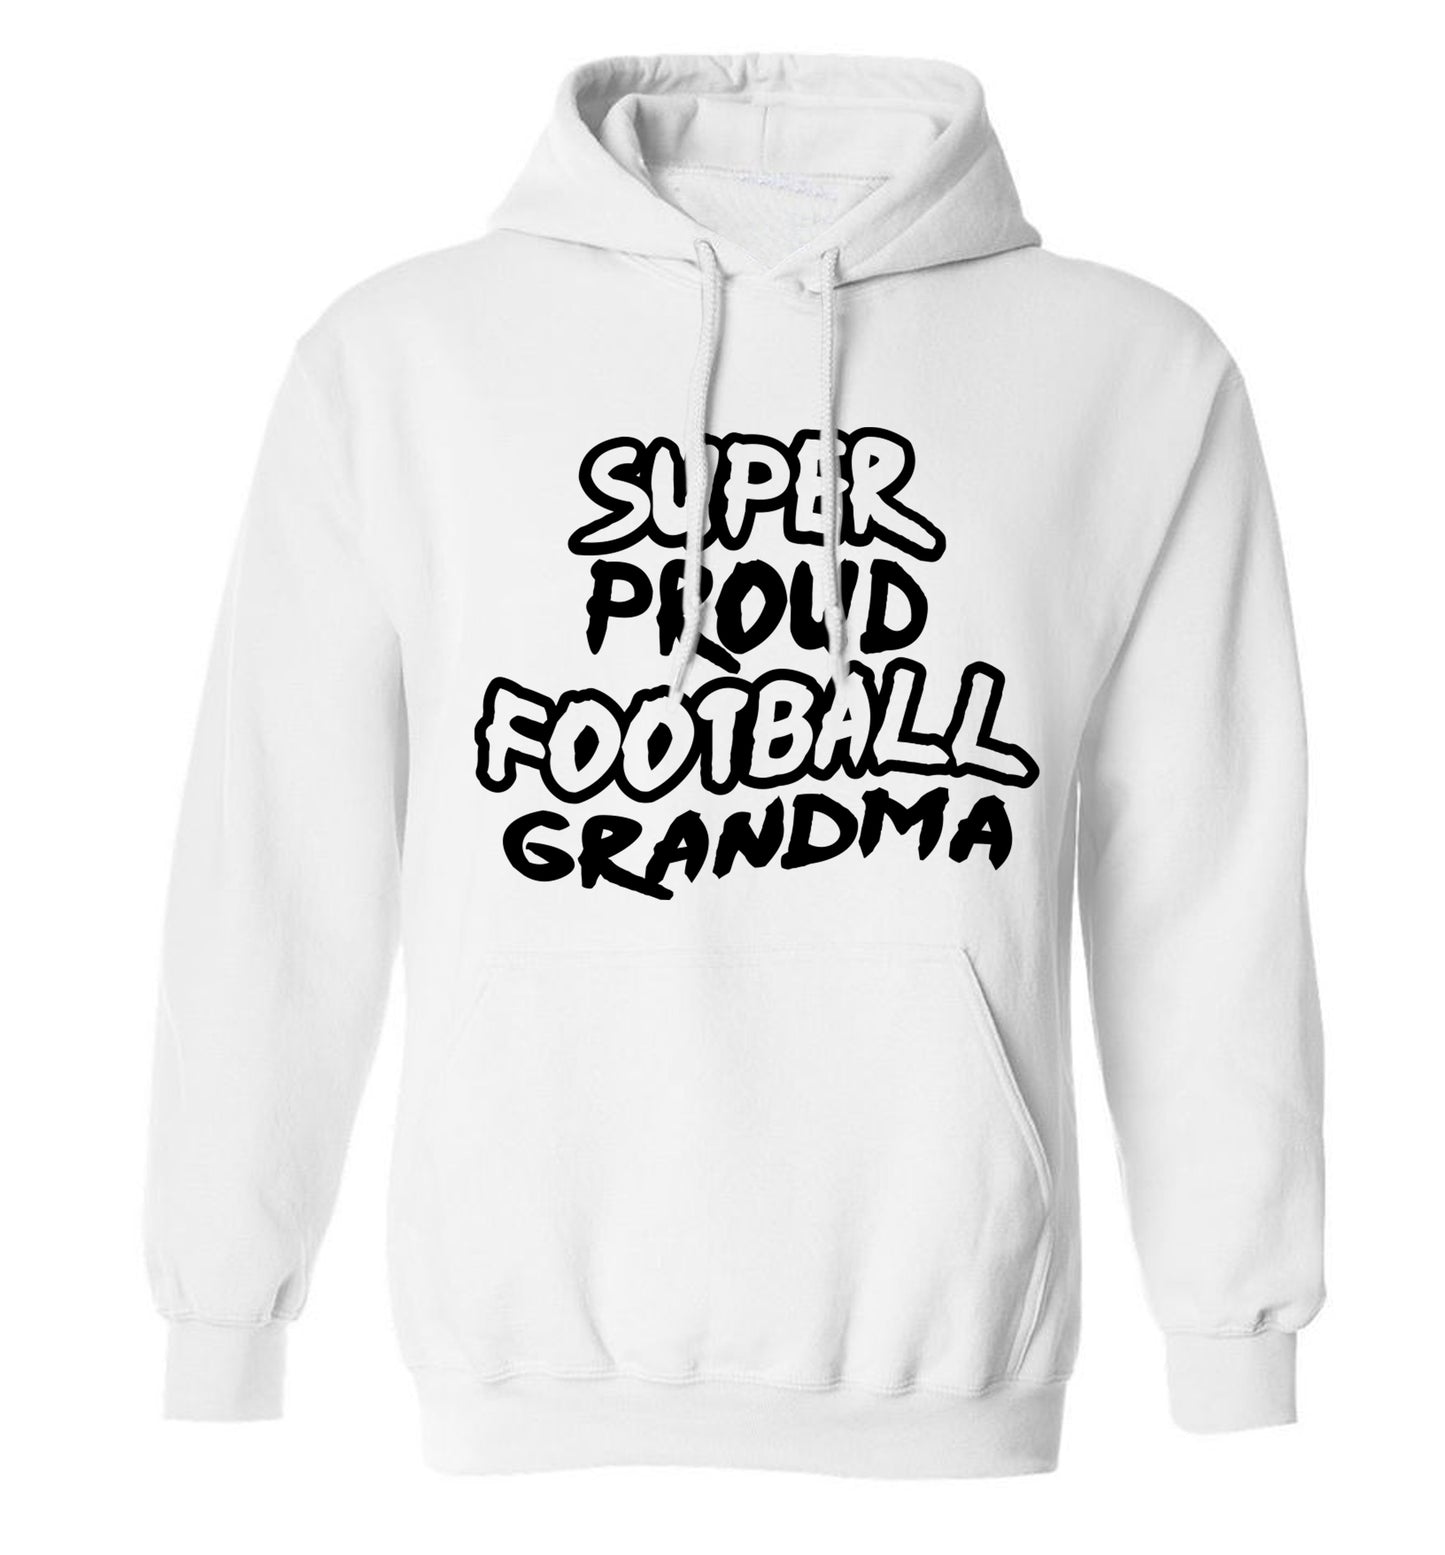 Super proud football grandma adults unisexwhite hoodie 2XL